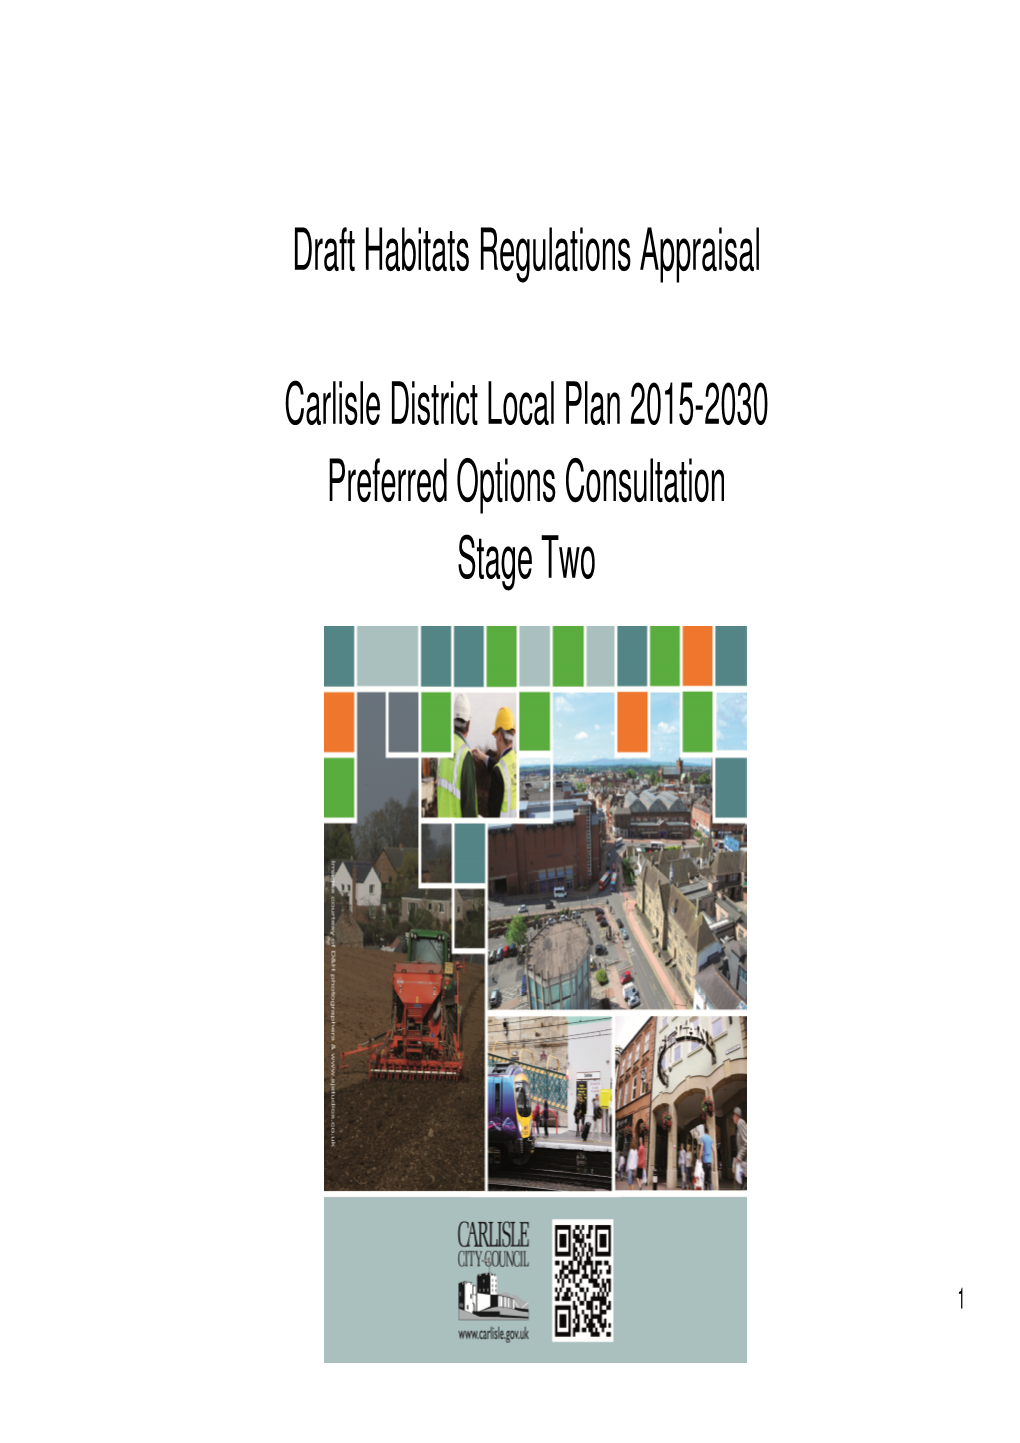 Draft Habitats Regulations Appraisal Carlisle District Local Plan 2015